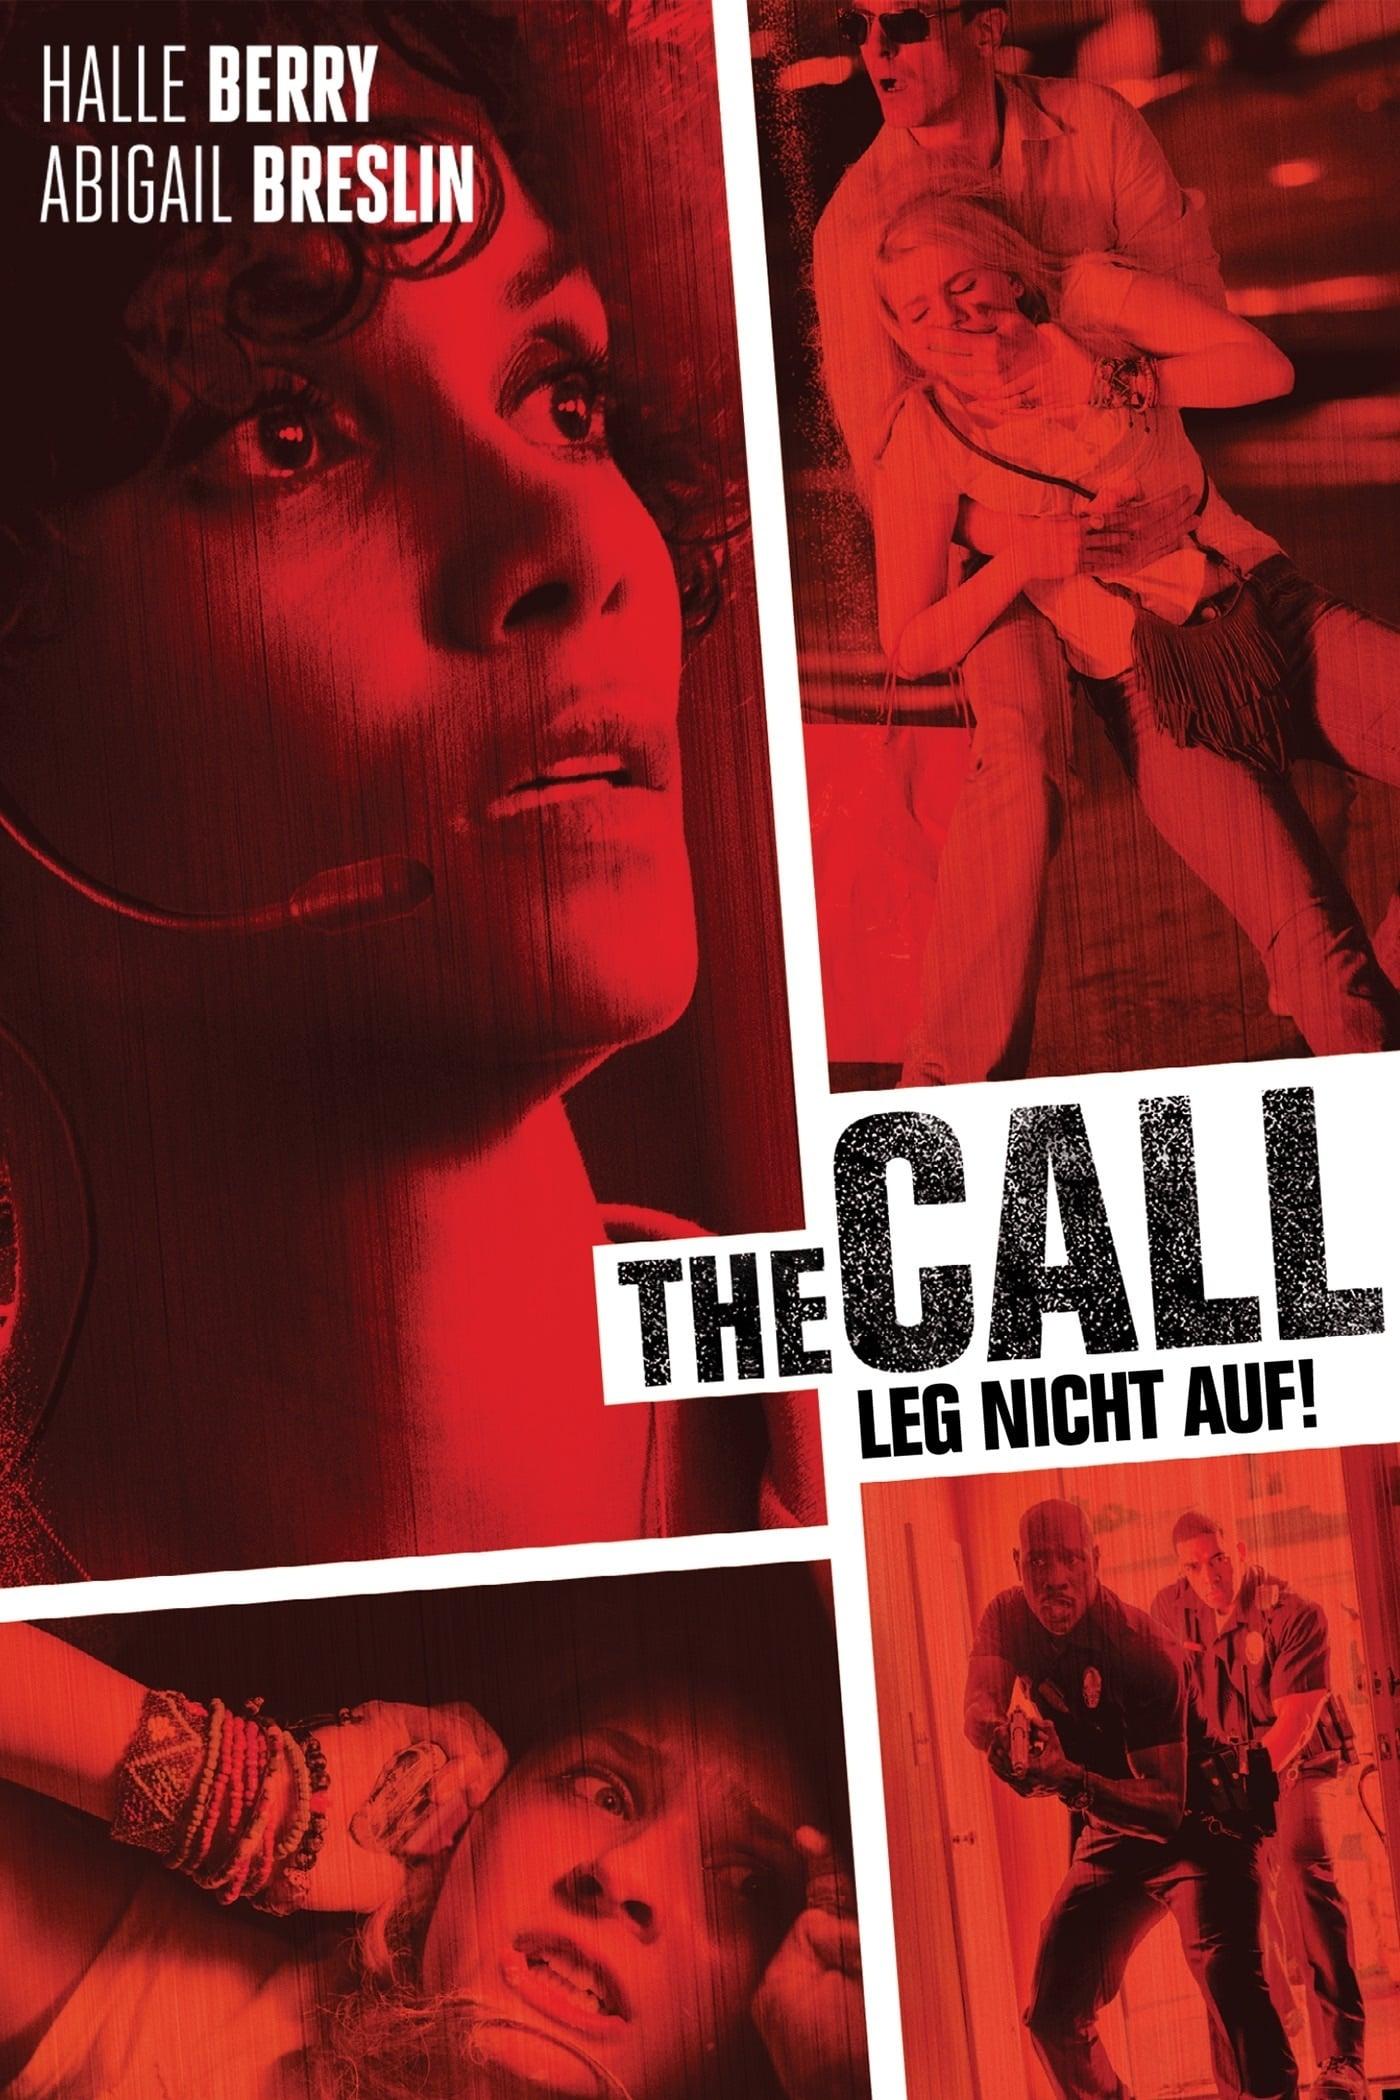 The Call - Leg nicht auf! poster